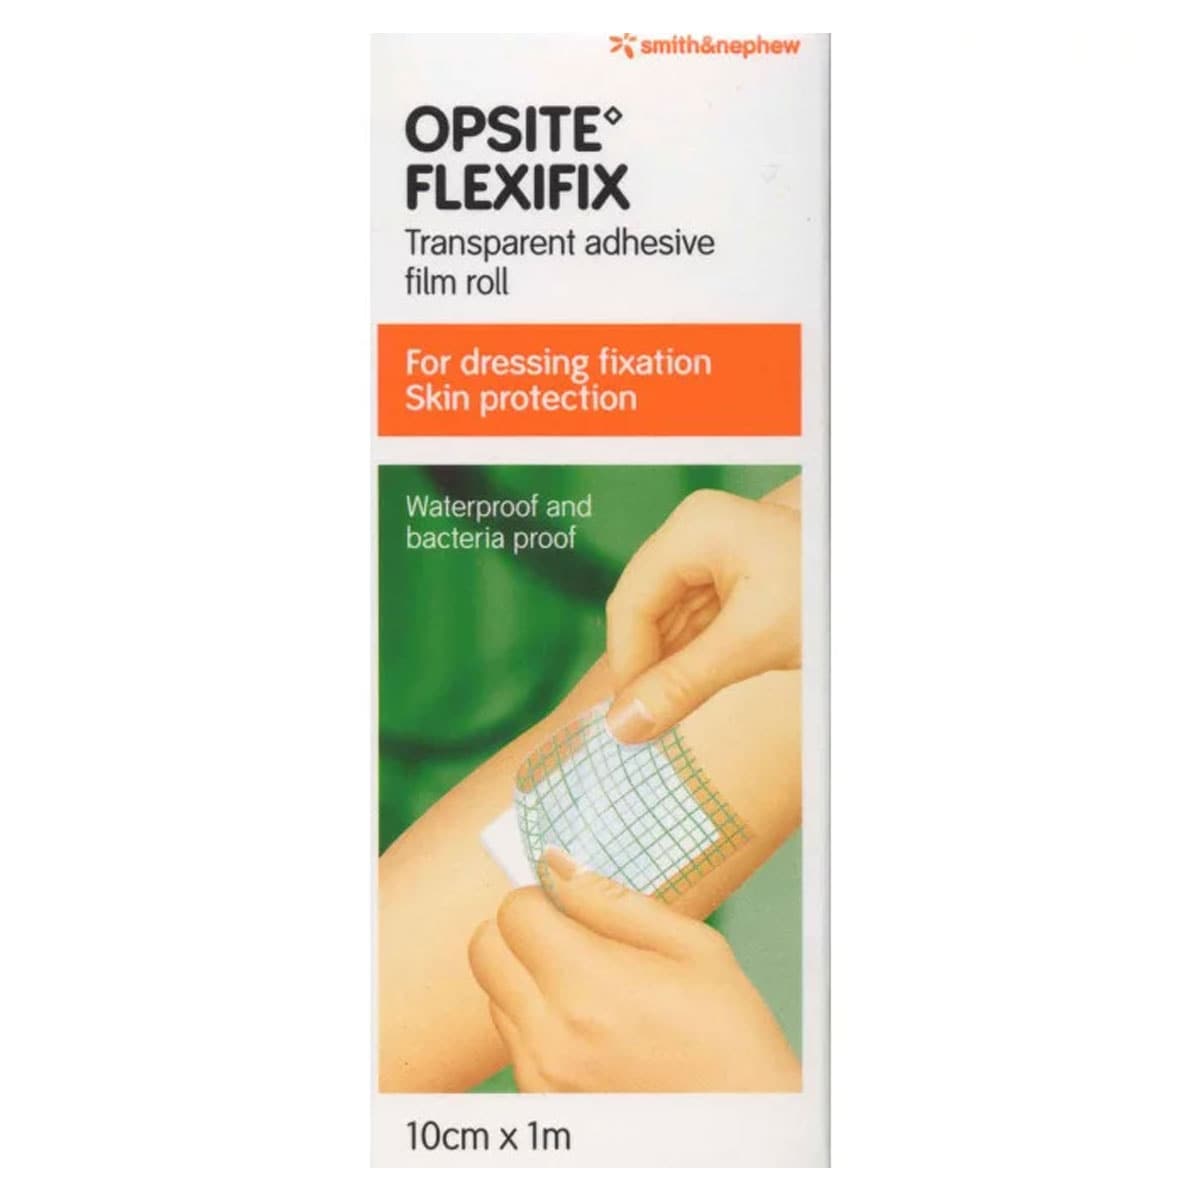 Opsite Flexifix Transparent Adhesive Film Roll 10cm x 1m by Smith & Nephew